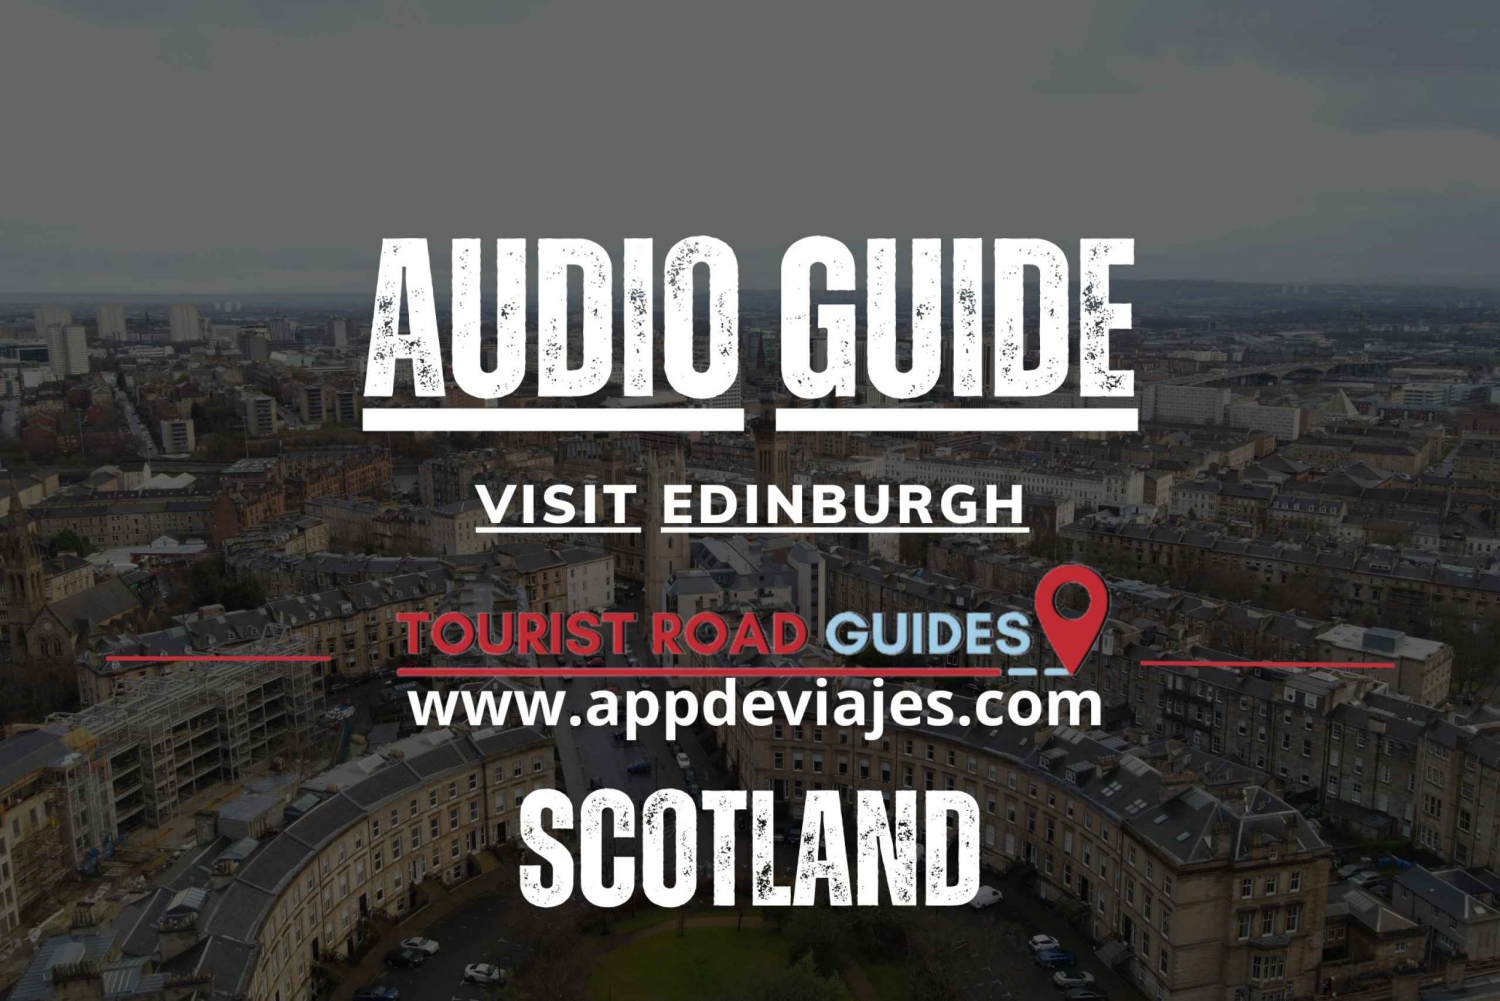 App self-guided: Tour Edinburgh in Scotland